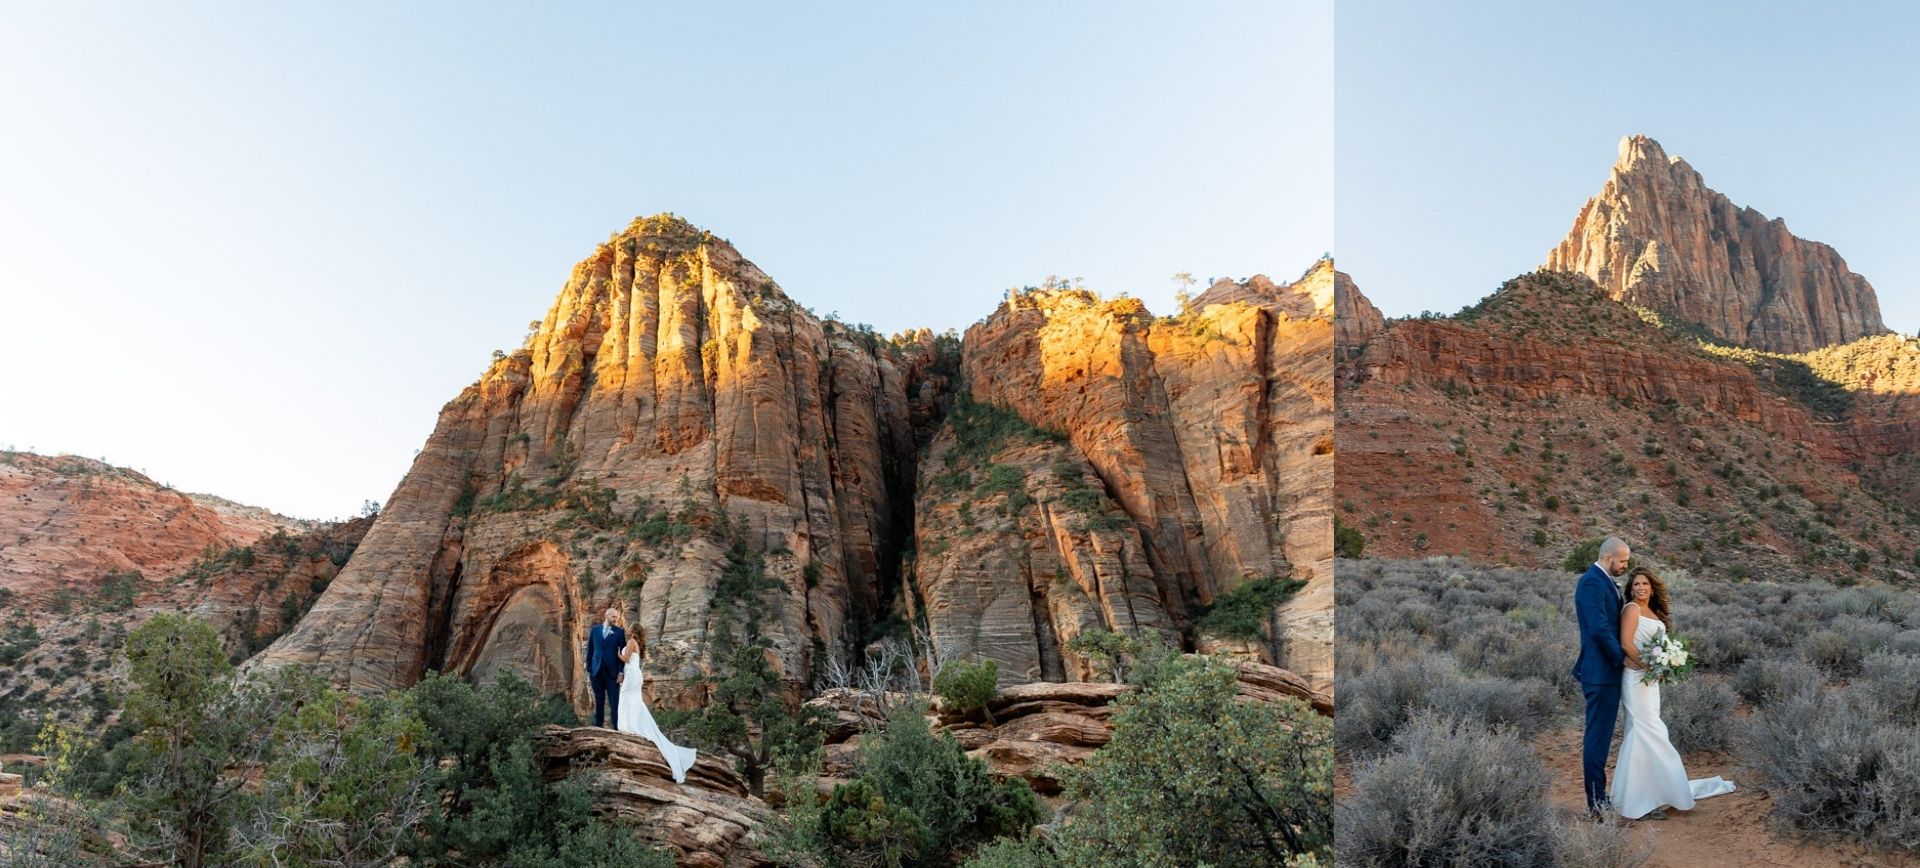 zion national park elopement package - utah - bride & groom wedding photos